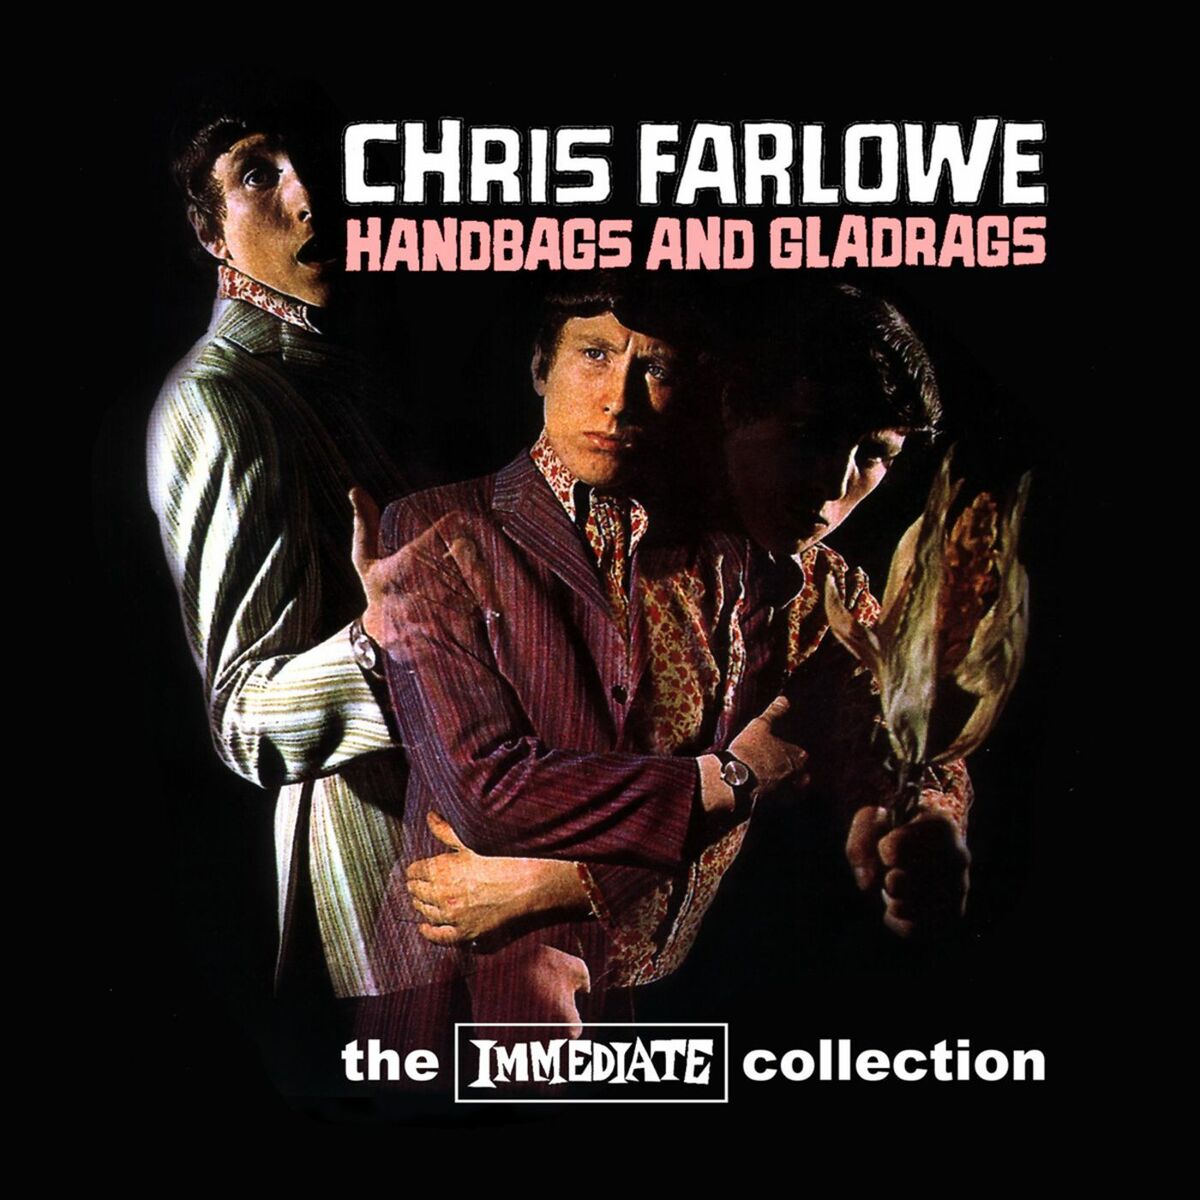 Chris Farlowe: albums, songs, playlists | Listen on Deezer